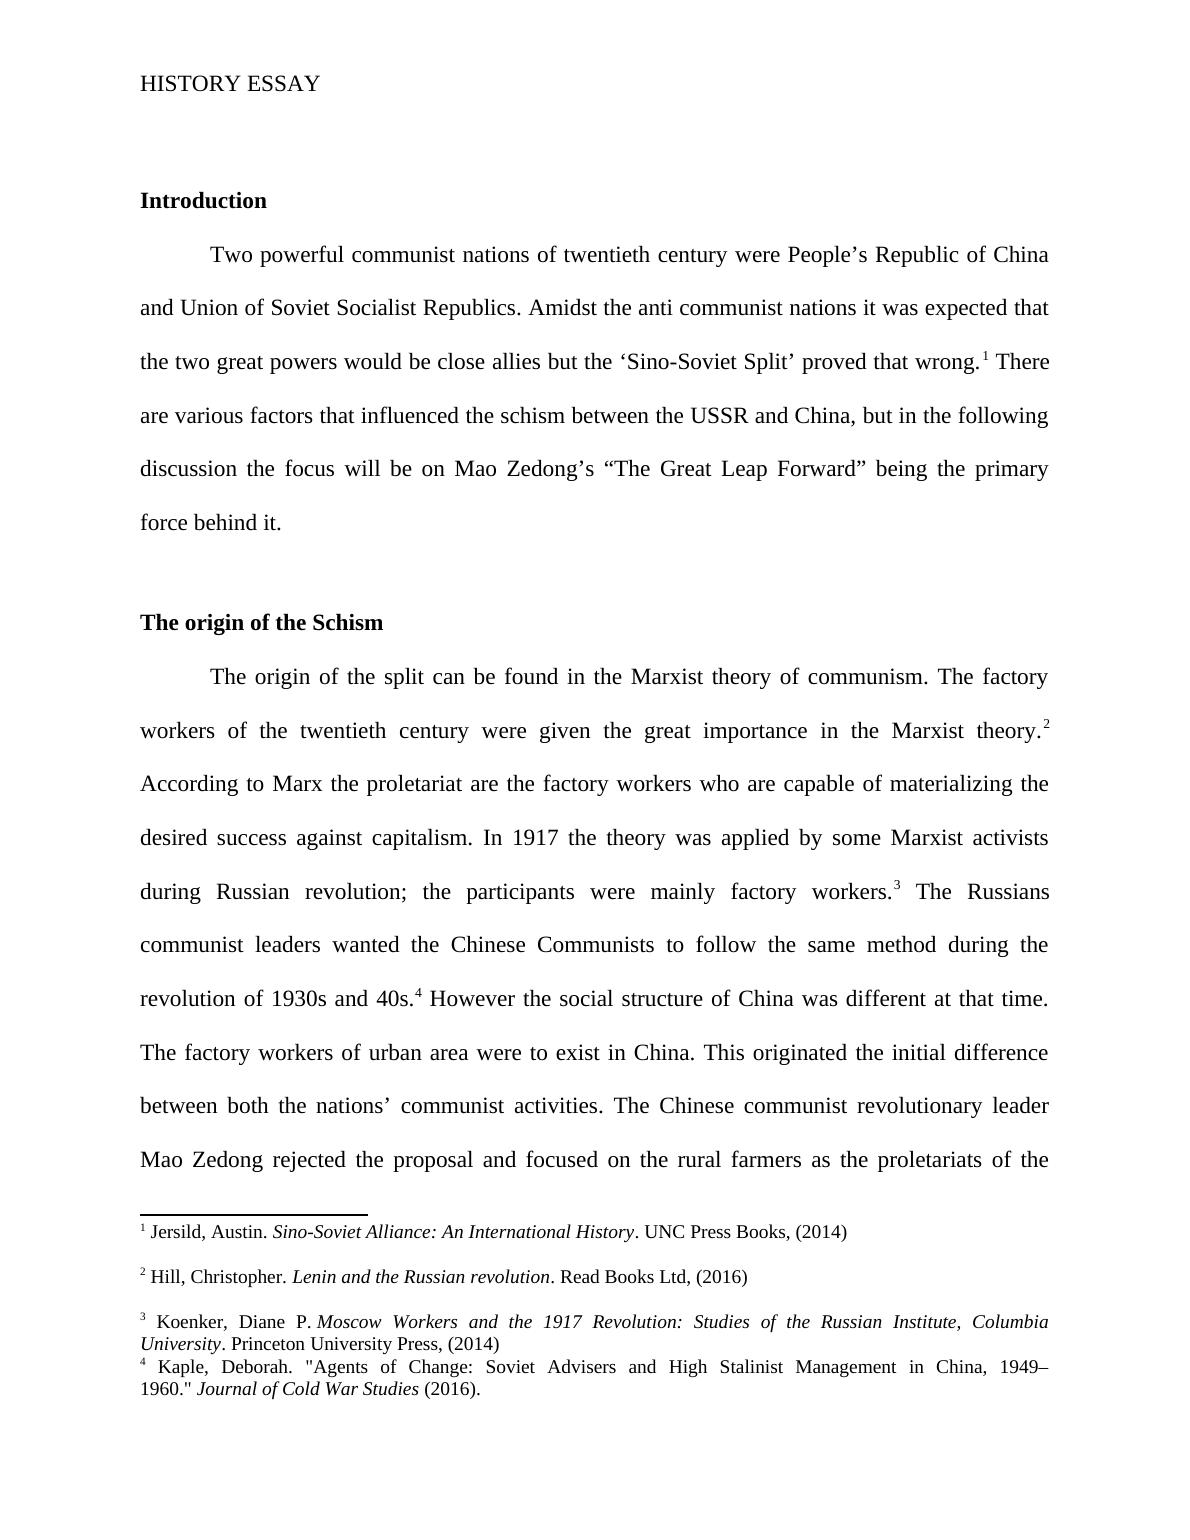 Реферат: Communism Overview Essay Research Paper Communism Overview